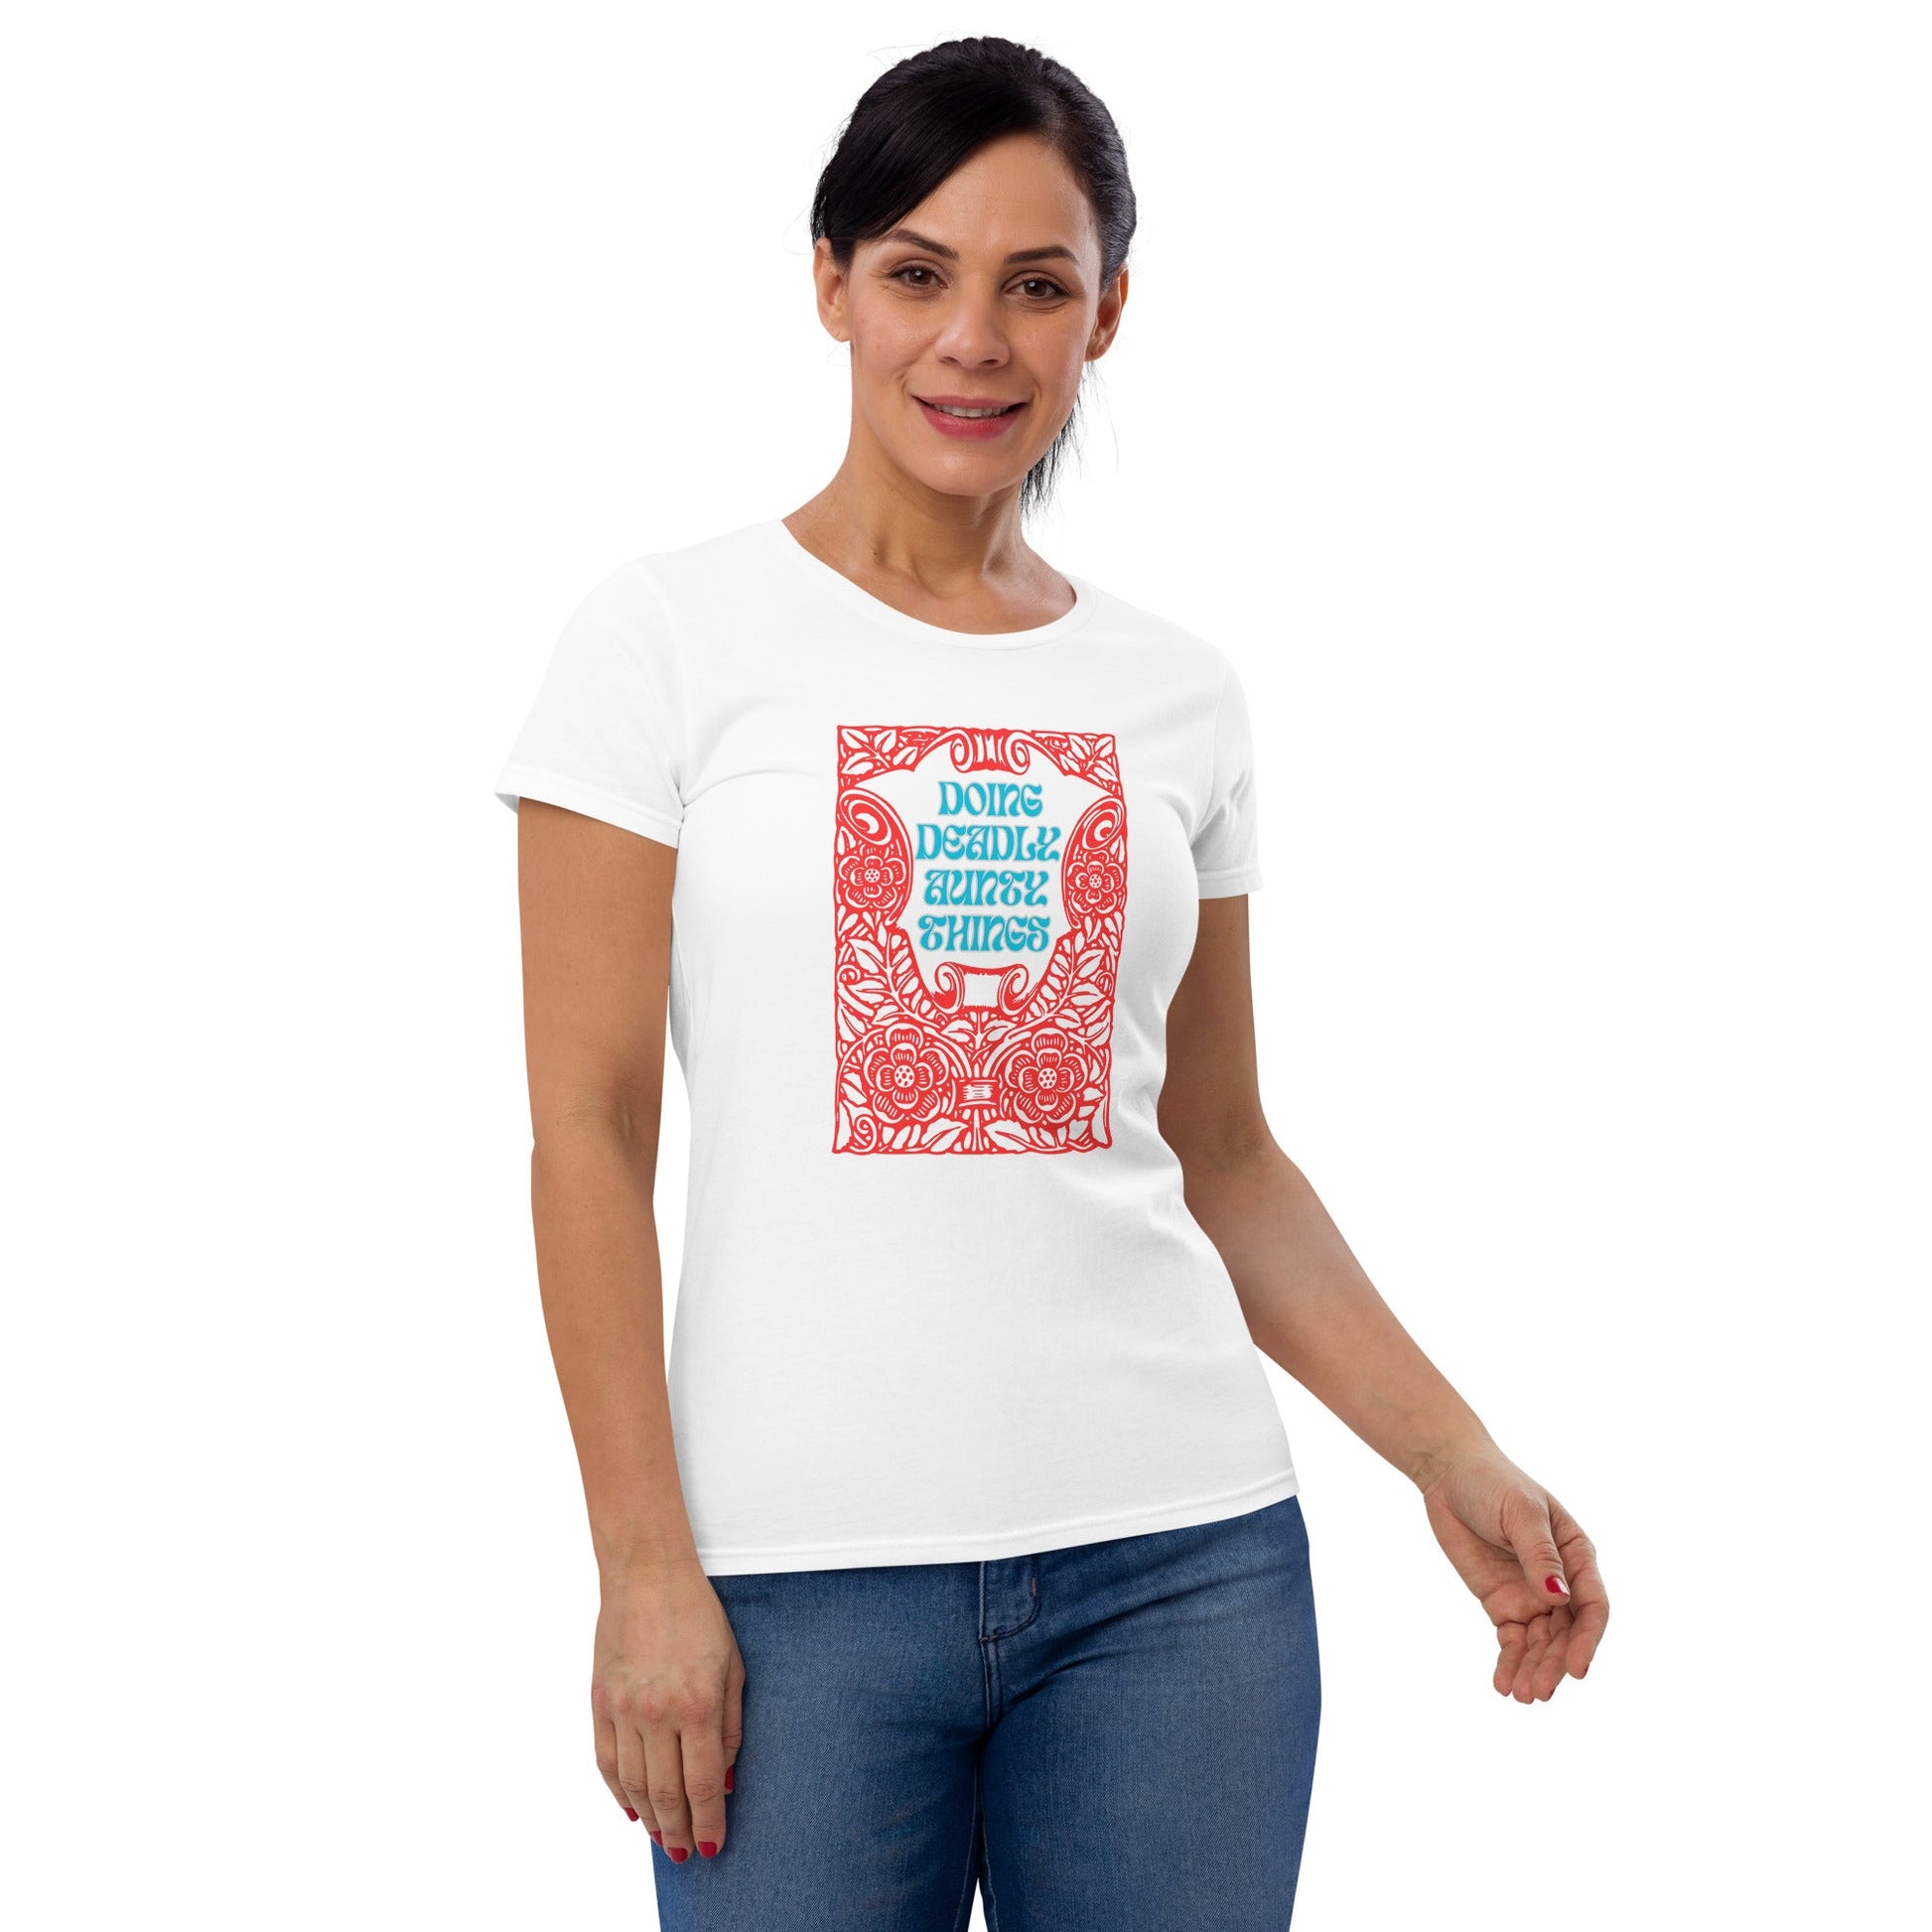 Women's short sleeve Graphic t-shirt Aunty Deadly - Nikikw Designs